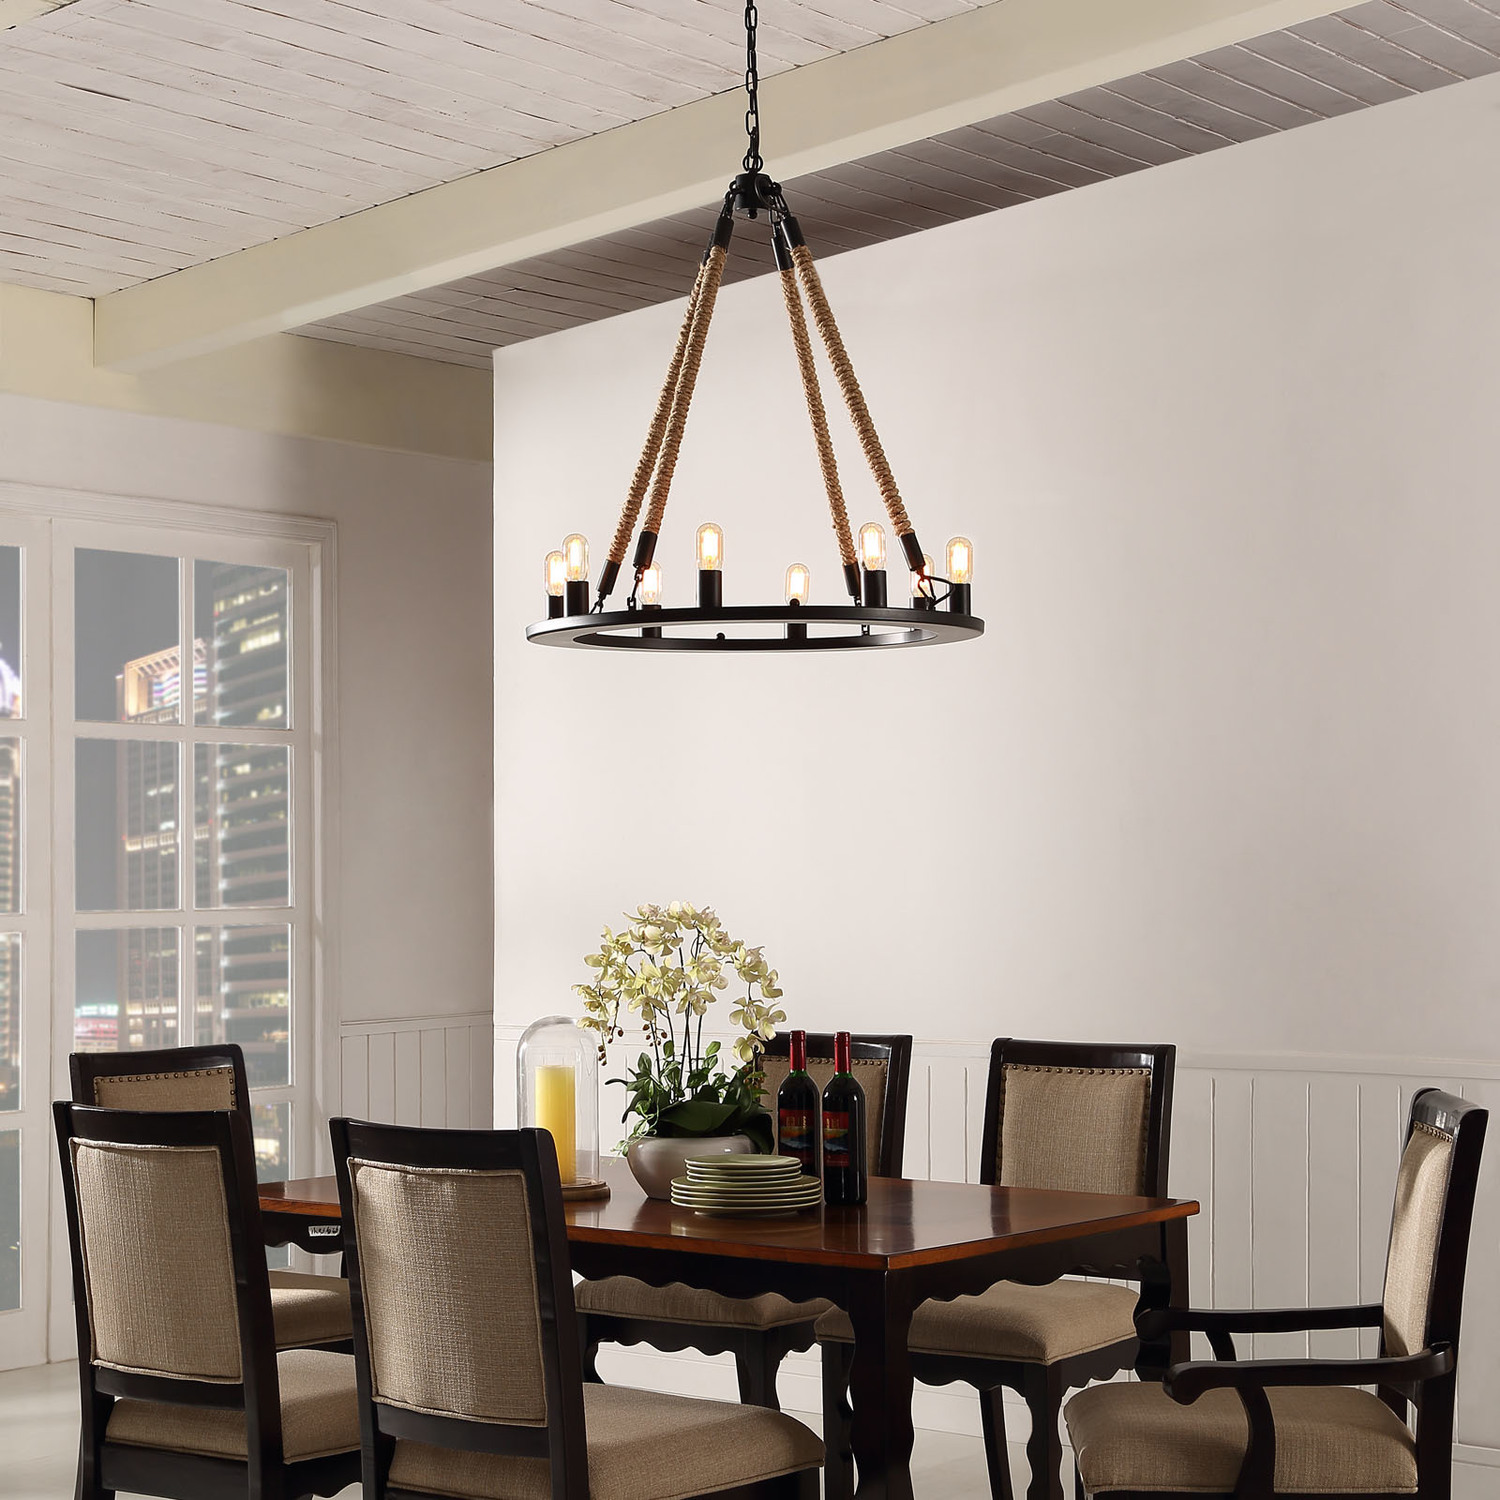 Modway Furniture Ceiling Lamps Chandelier Black